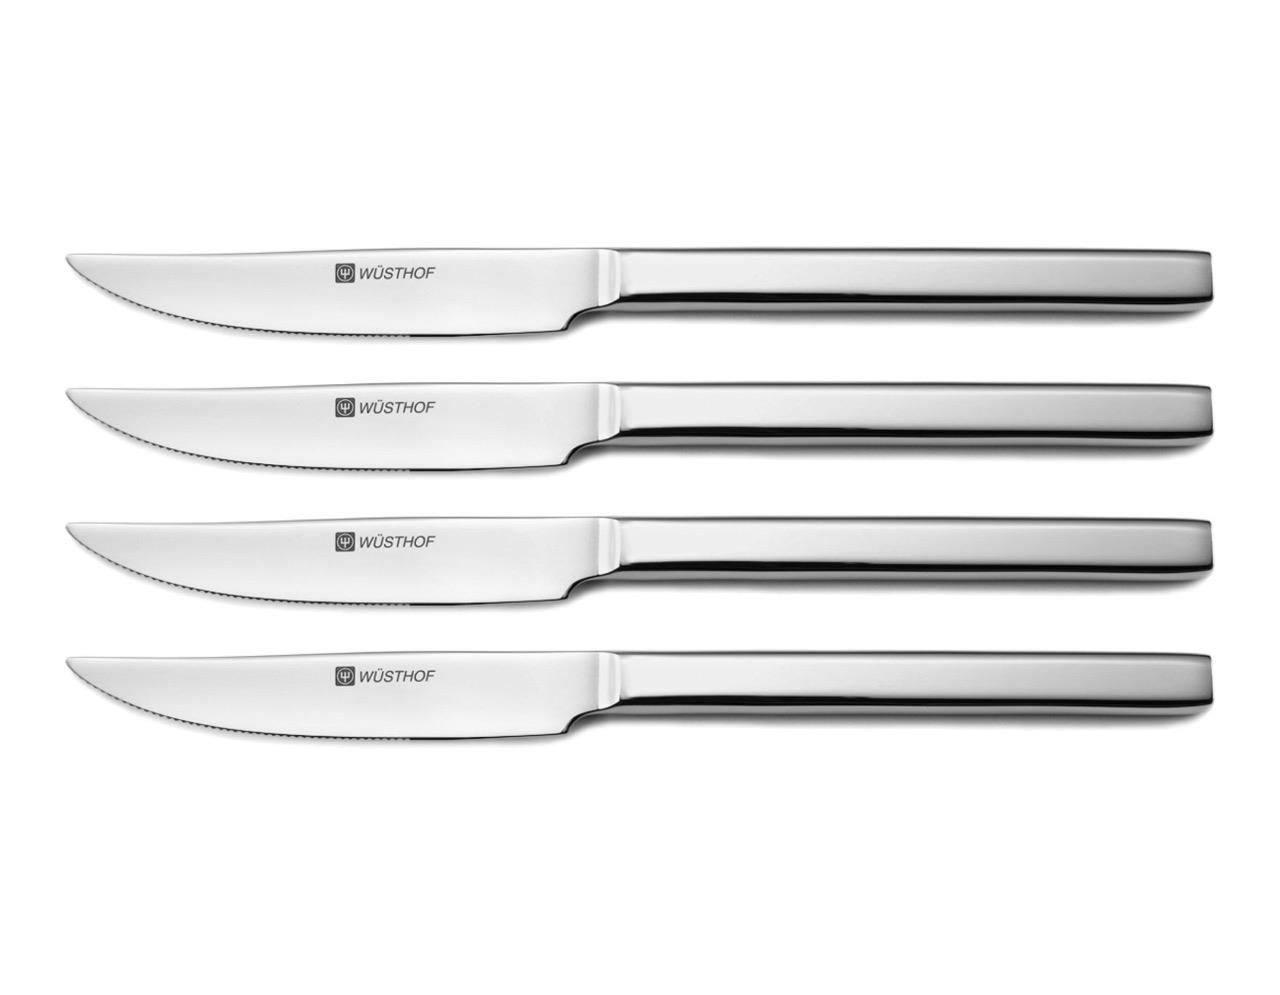 Wusthof 4 Piece Stainless Steel Presentation Steak Knife Set #8460 | eBay Wusthof Stainless Steel Steak Knives